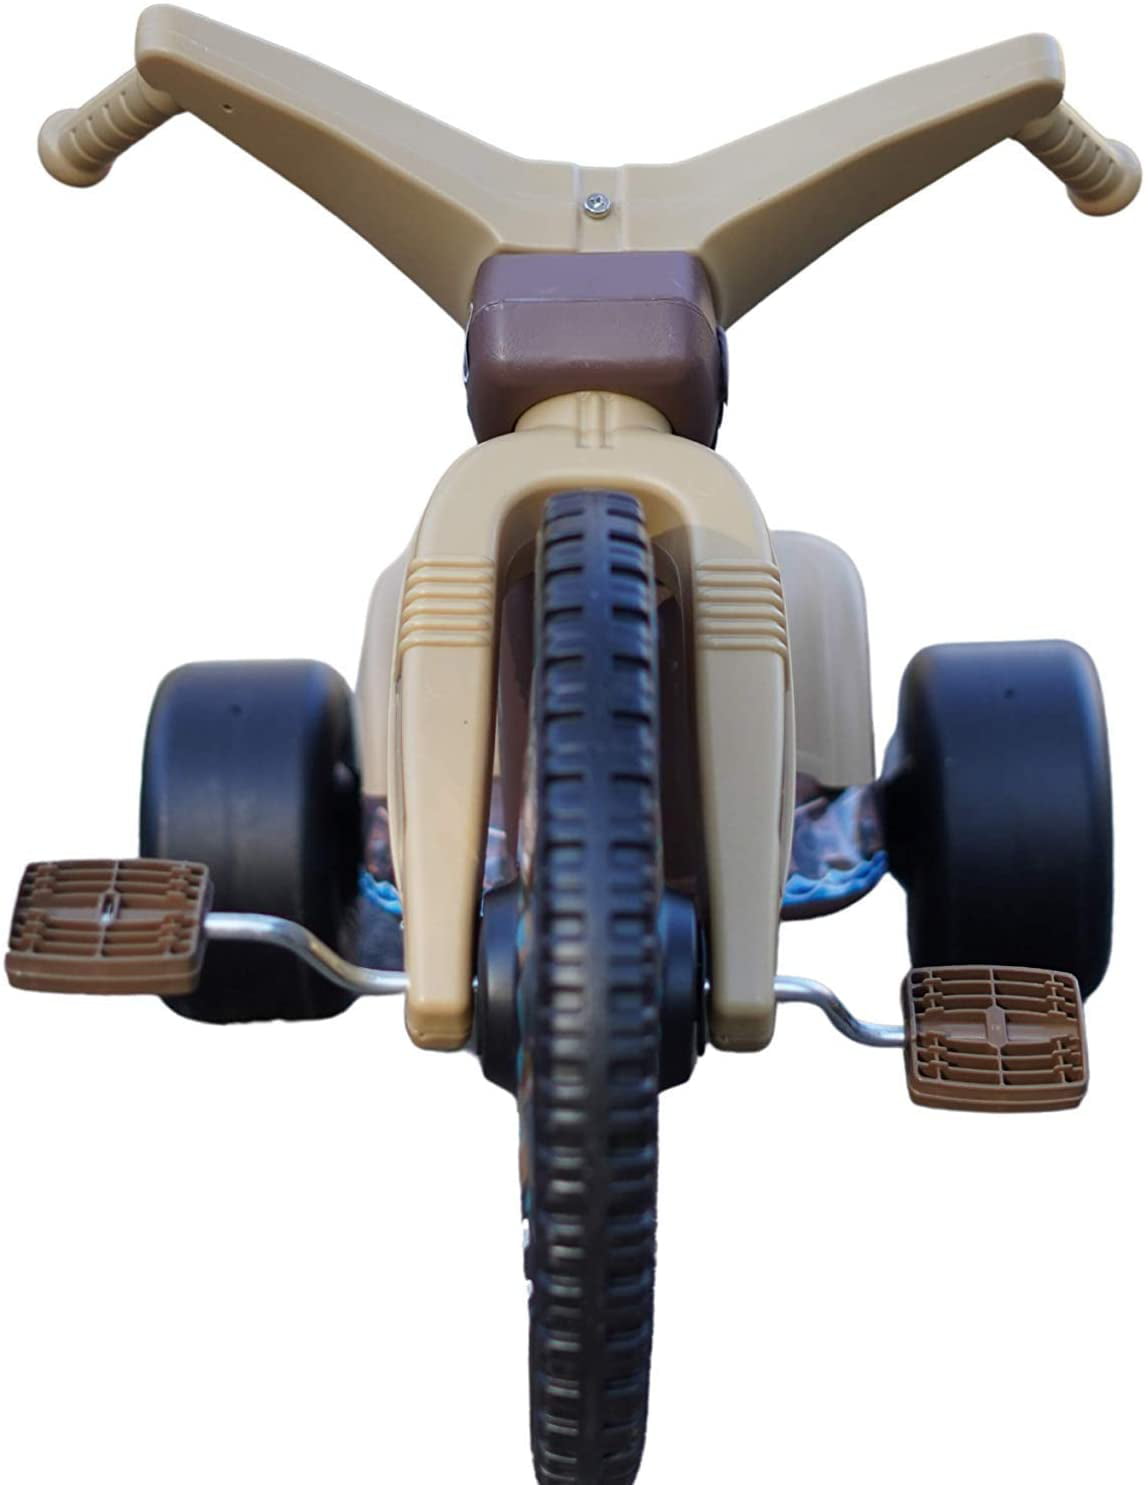 The Original Big Wheel 16 Inch Tricycle - Big Wheel for Kids 3-8 Boys –  ShopHippo